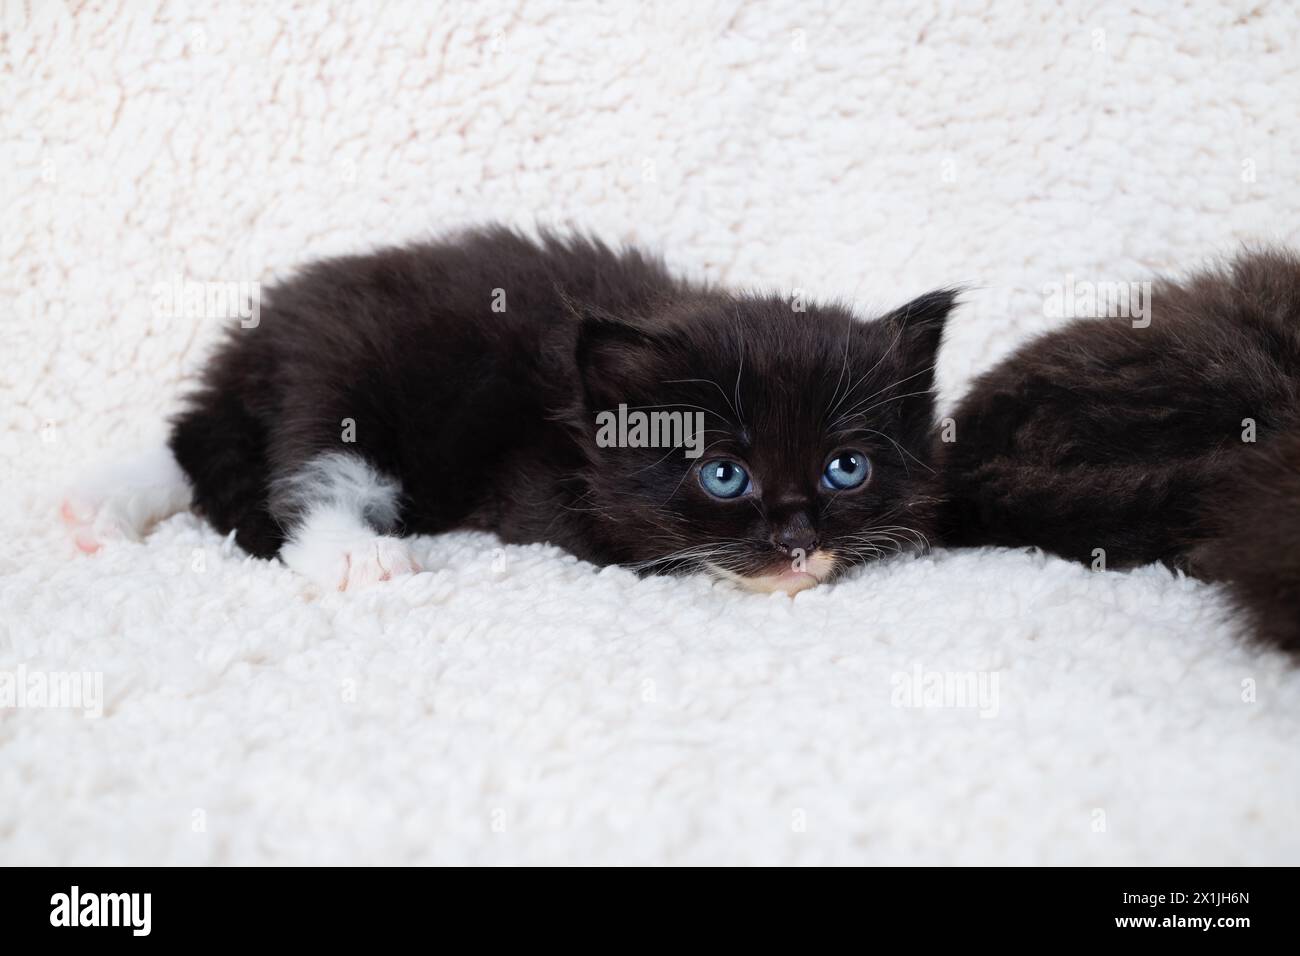 Cute kitten cat lying on a fluffy white sheet. Stock Photo